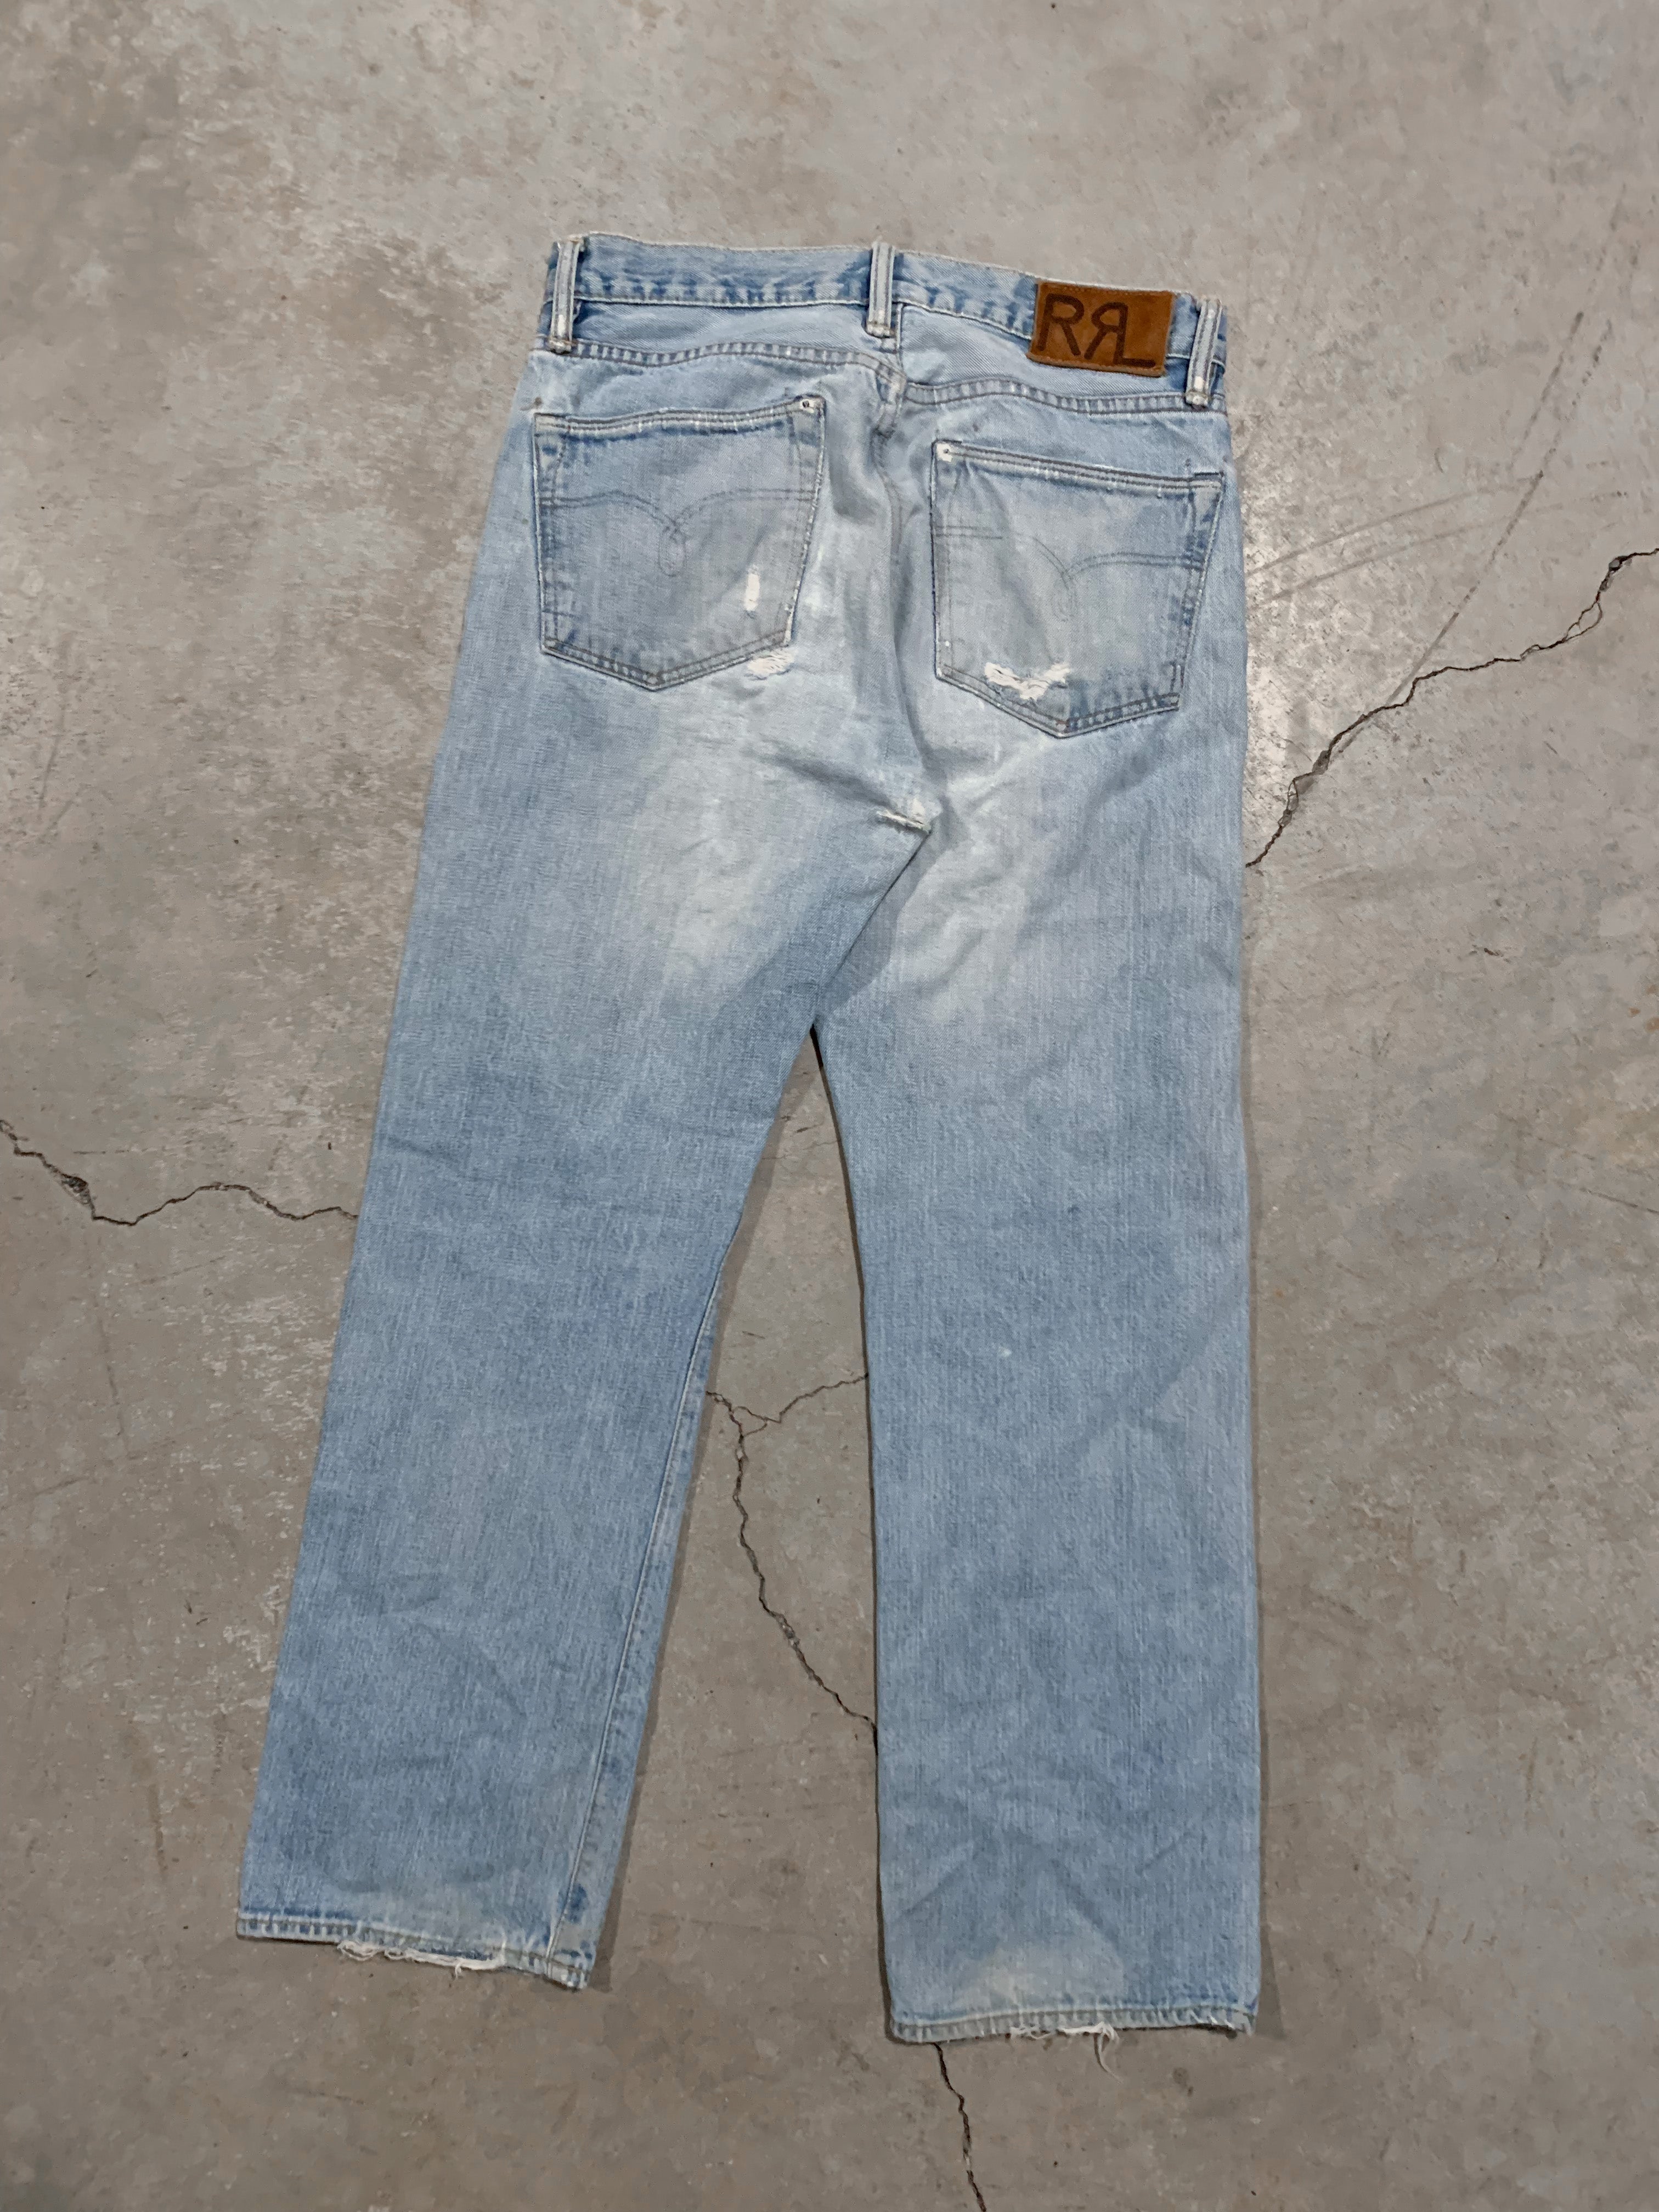 1990s RRL Japan Woven Selvedge Jeans [31 x 29]